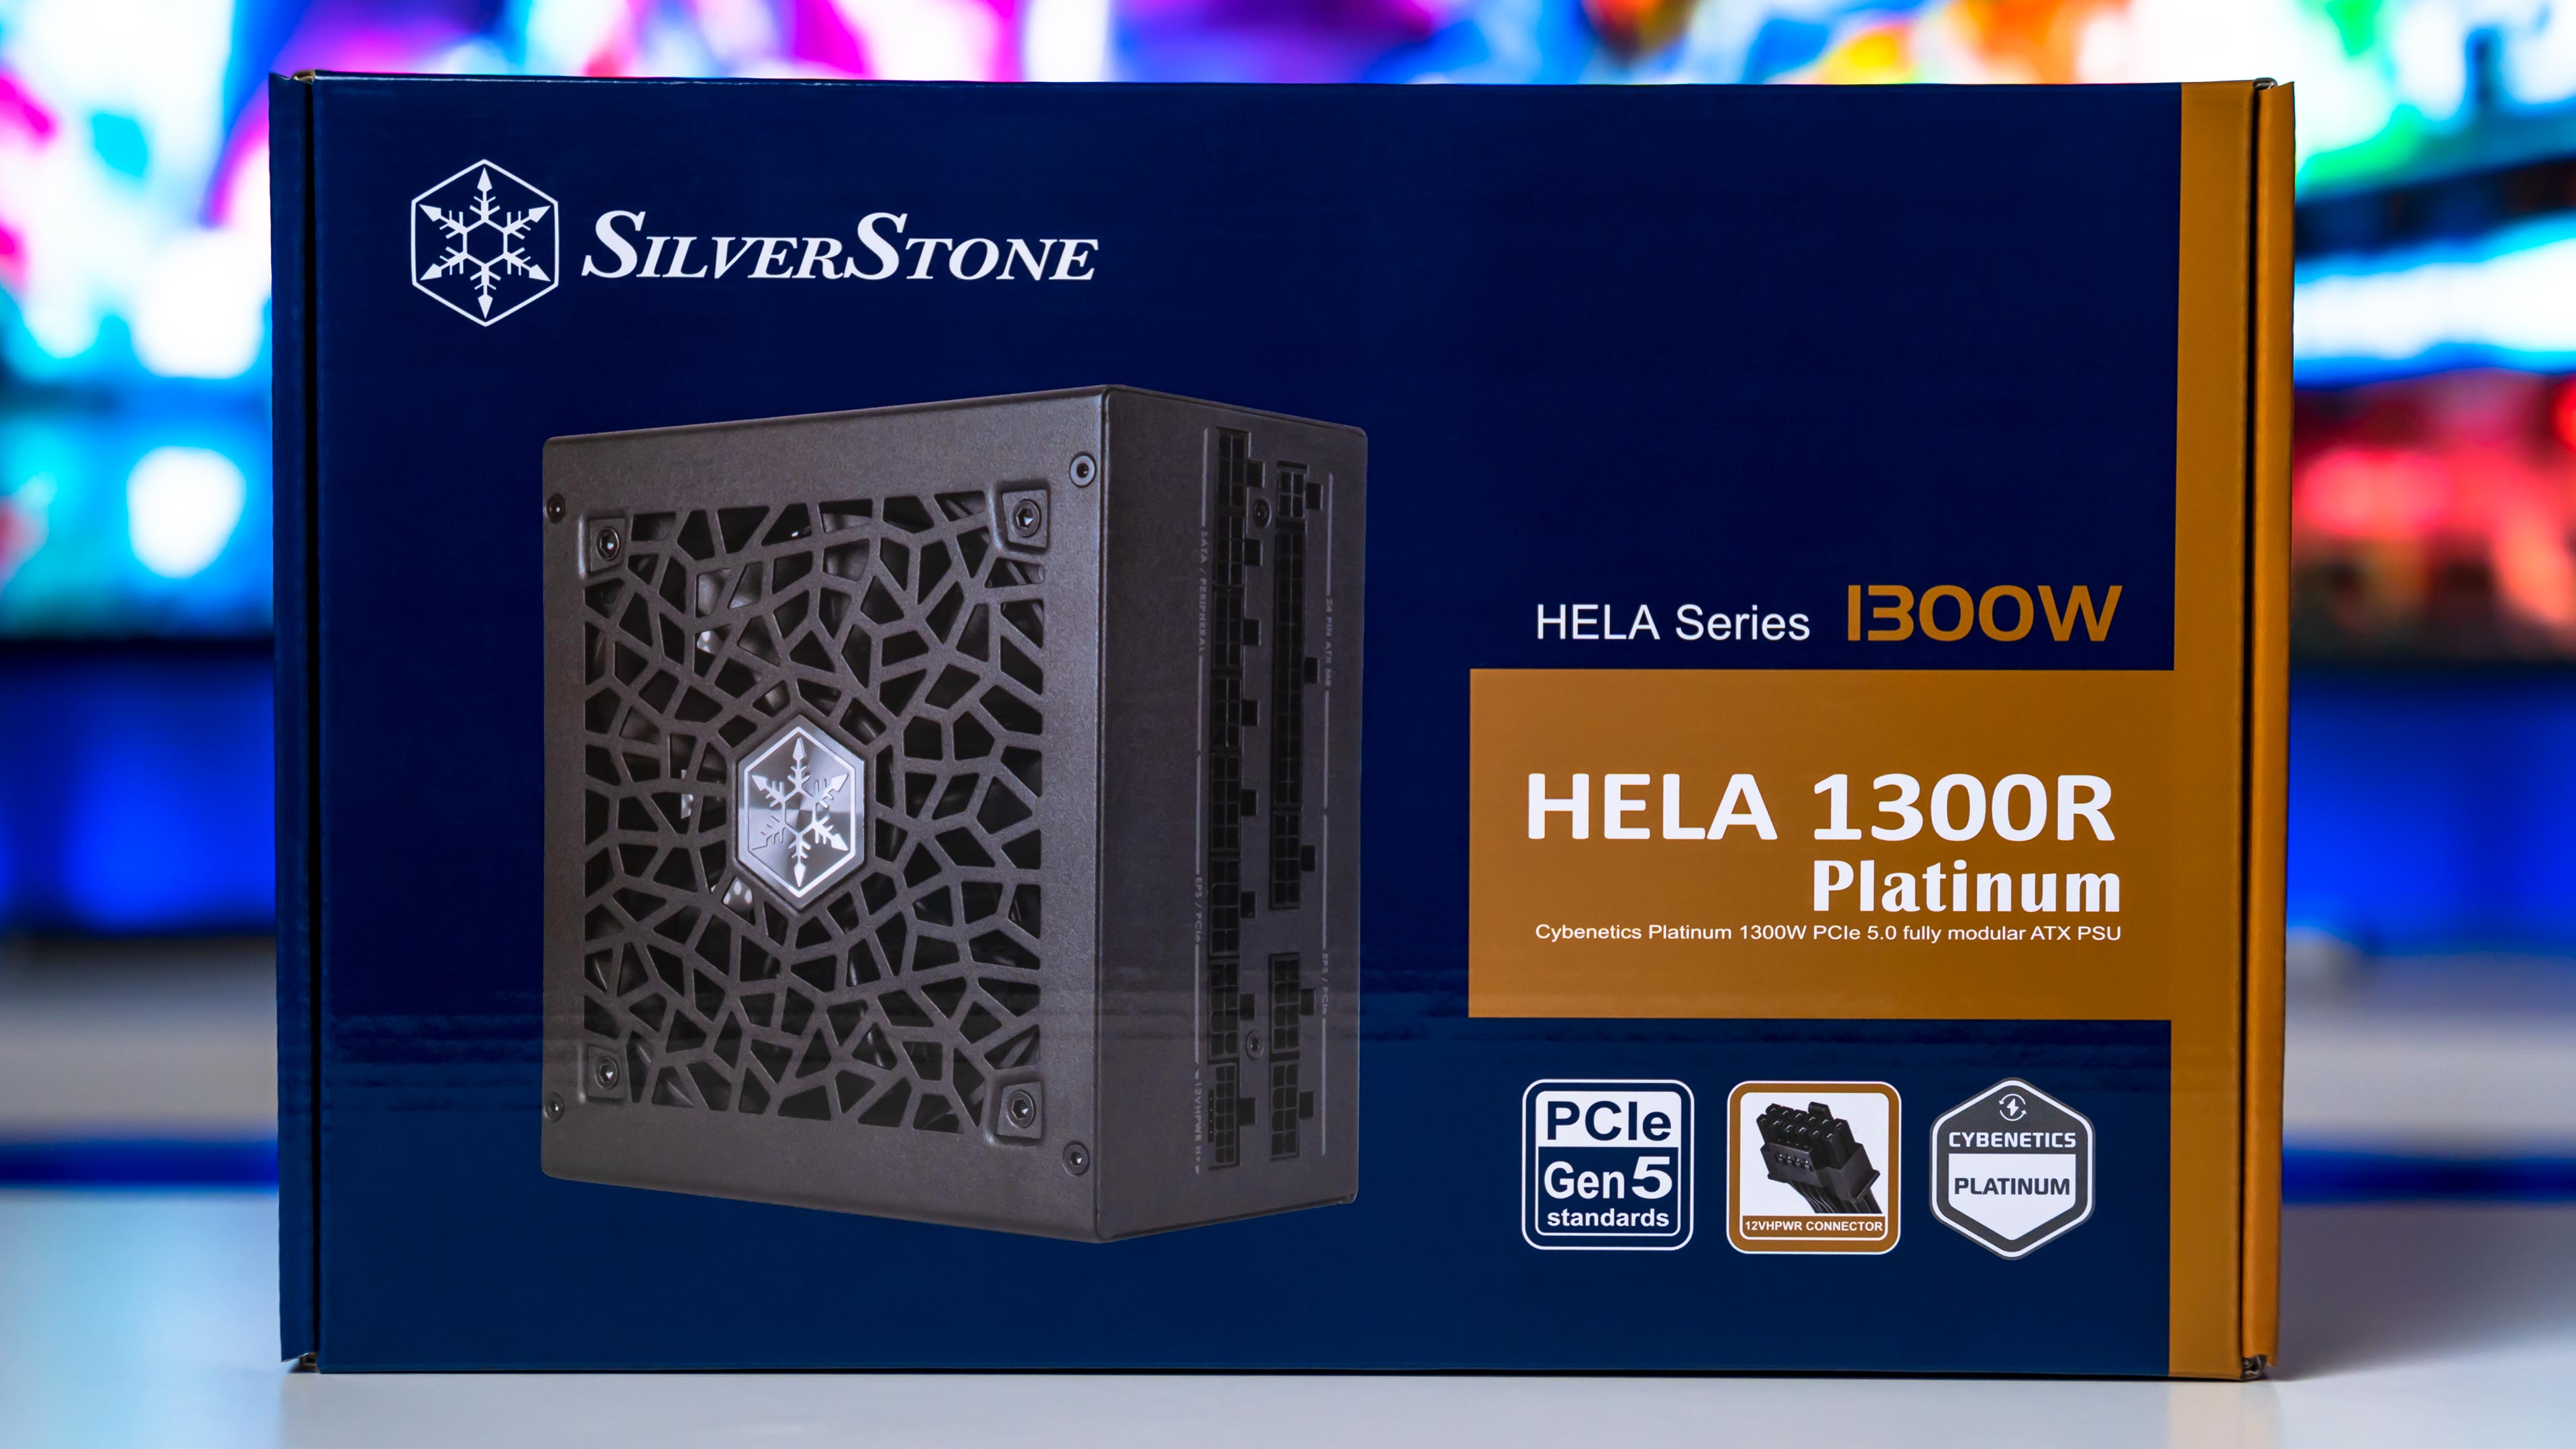 Silverstone HELA 1300R Platinum Box (1)